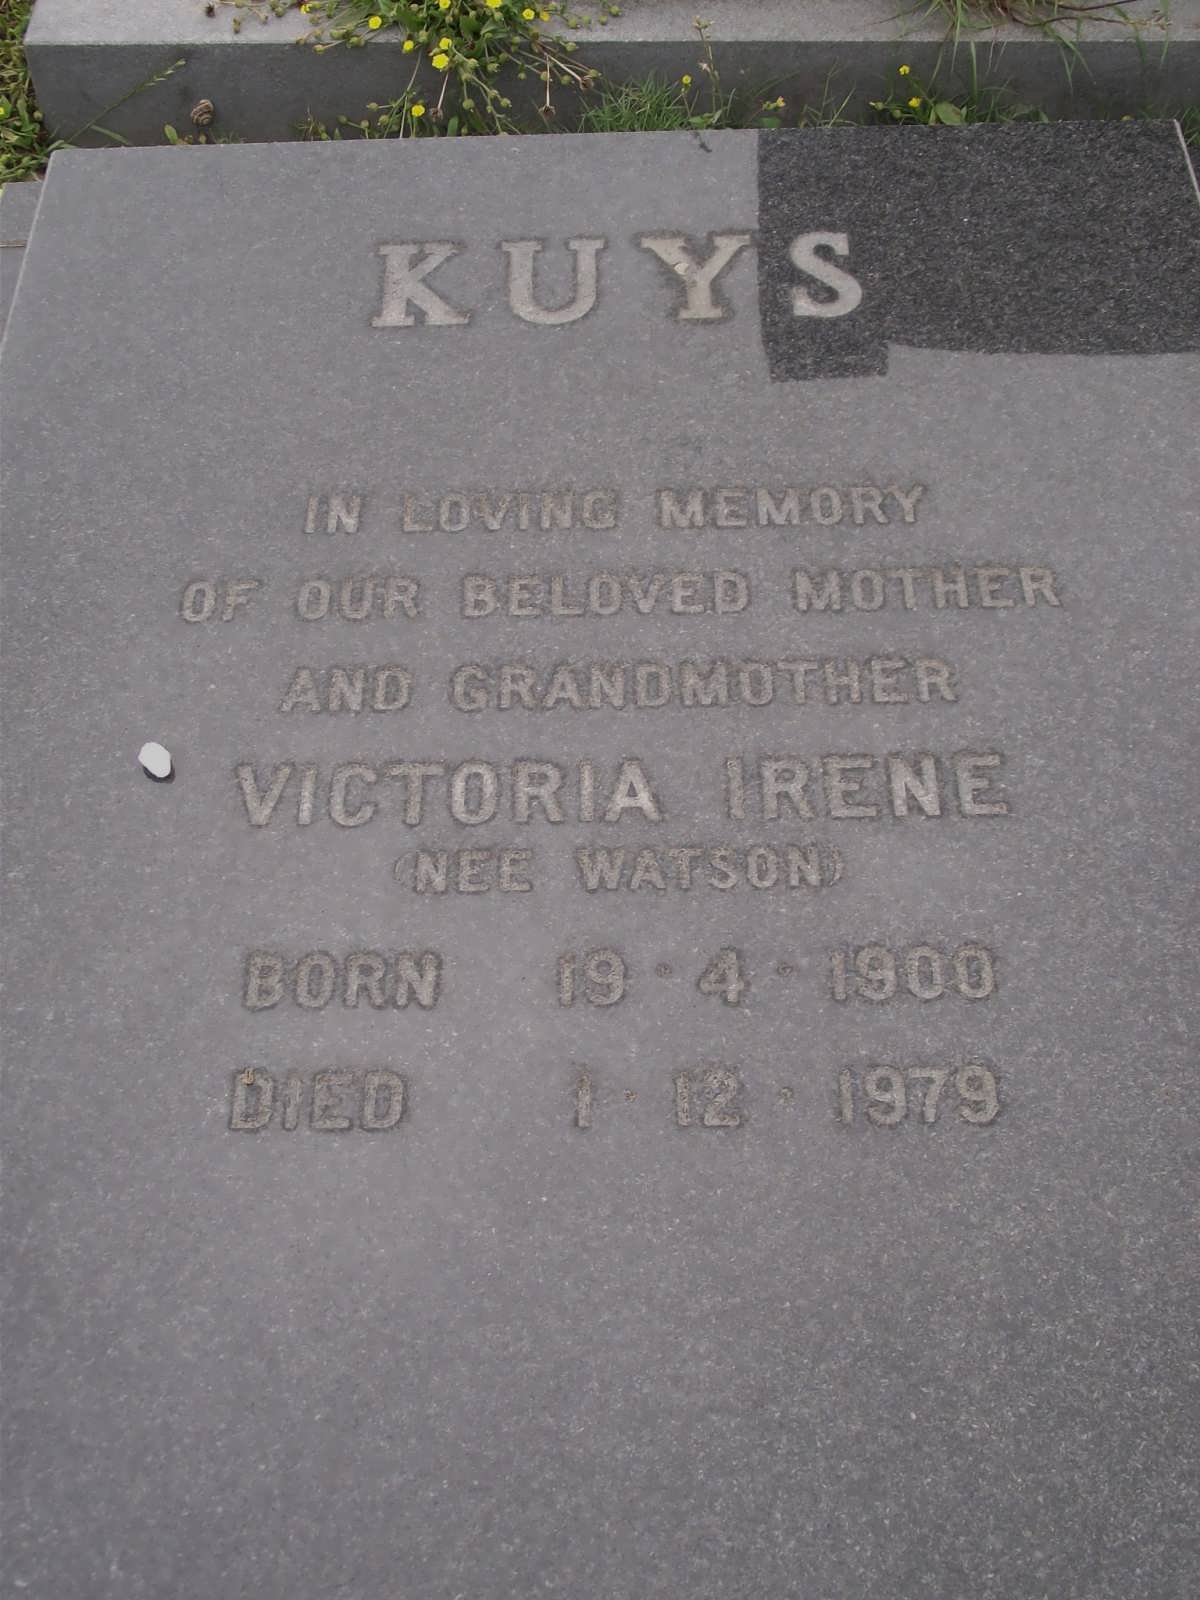 KUYS Victoria Irene nee WATSON 1900-1979